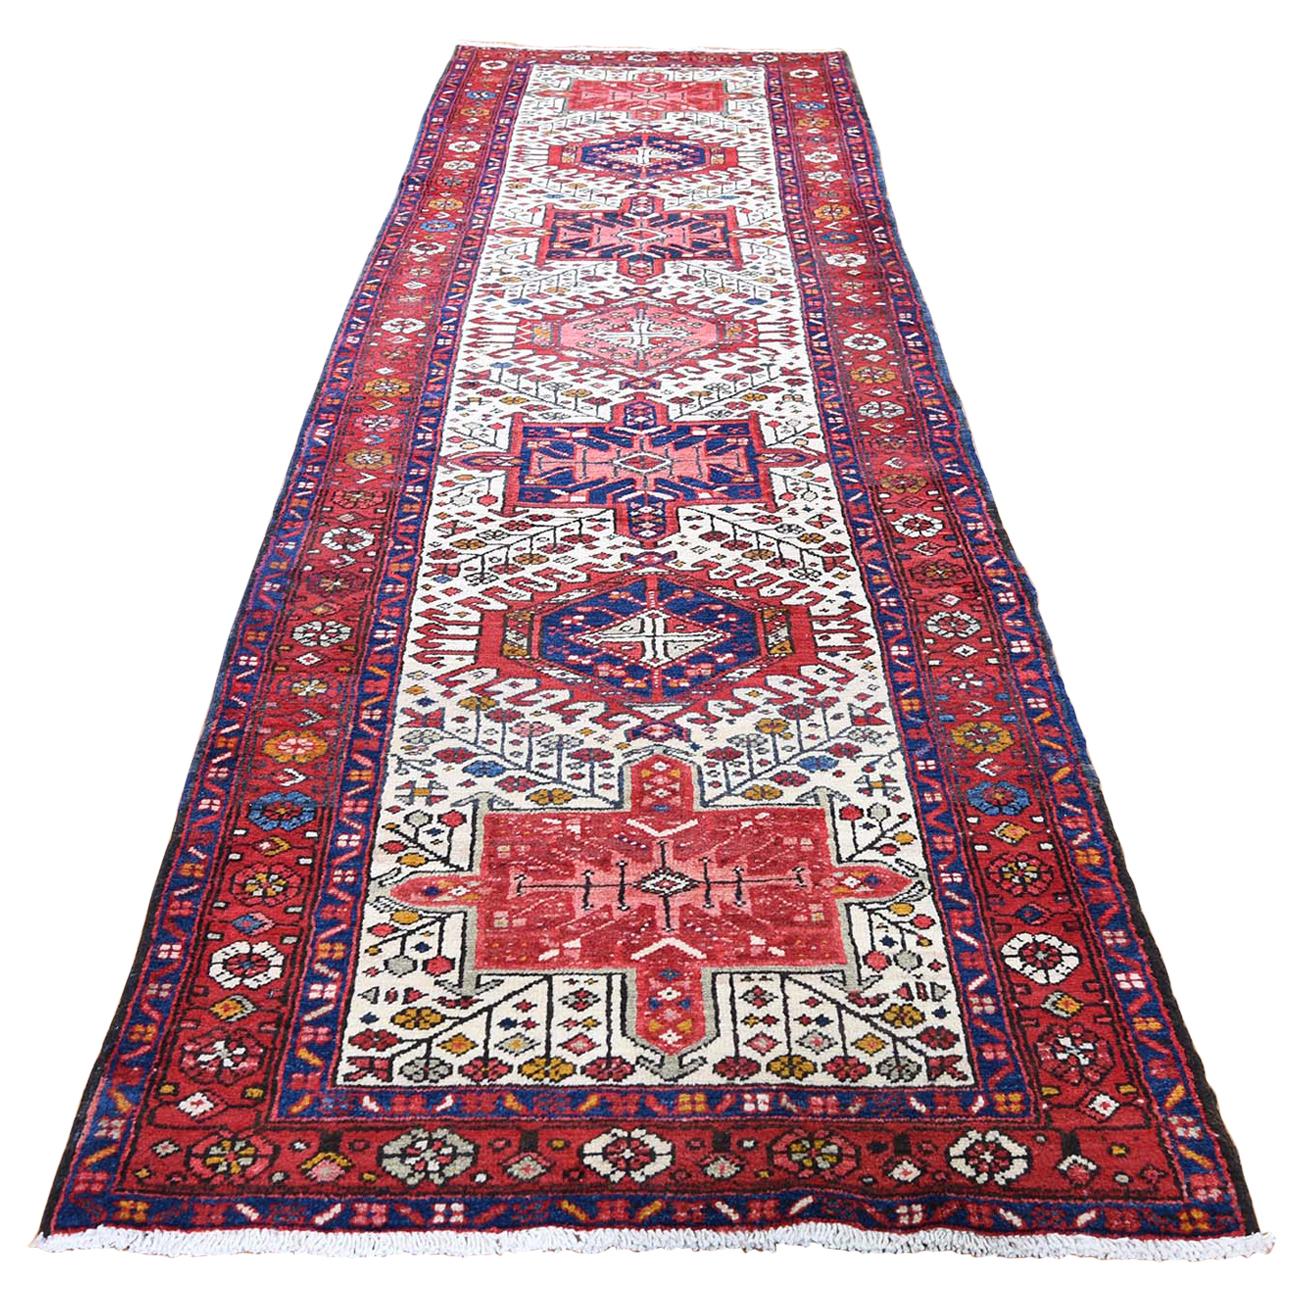 Vintage Persian Karajeh Pure Wool Hand-Knotted Runner Oriental Rug, 3'3" x 11'2"